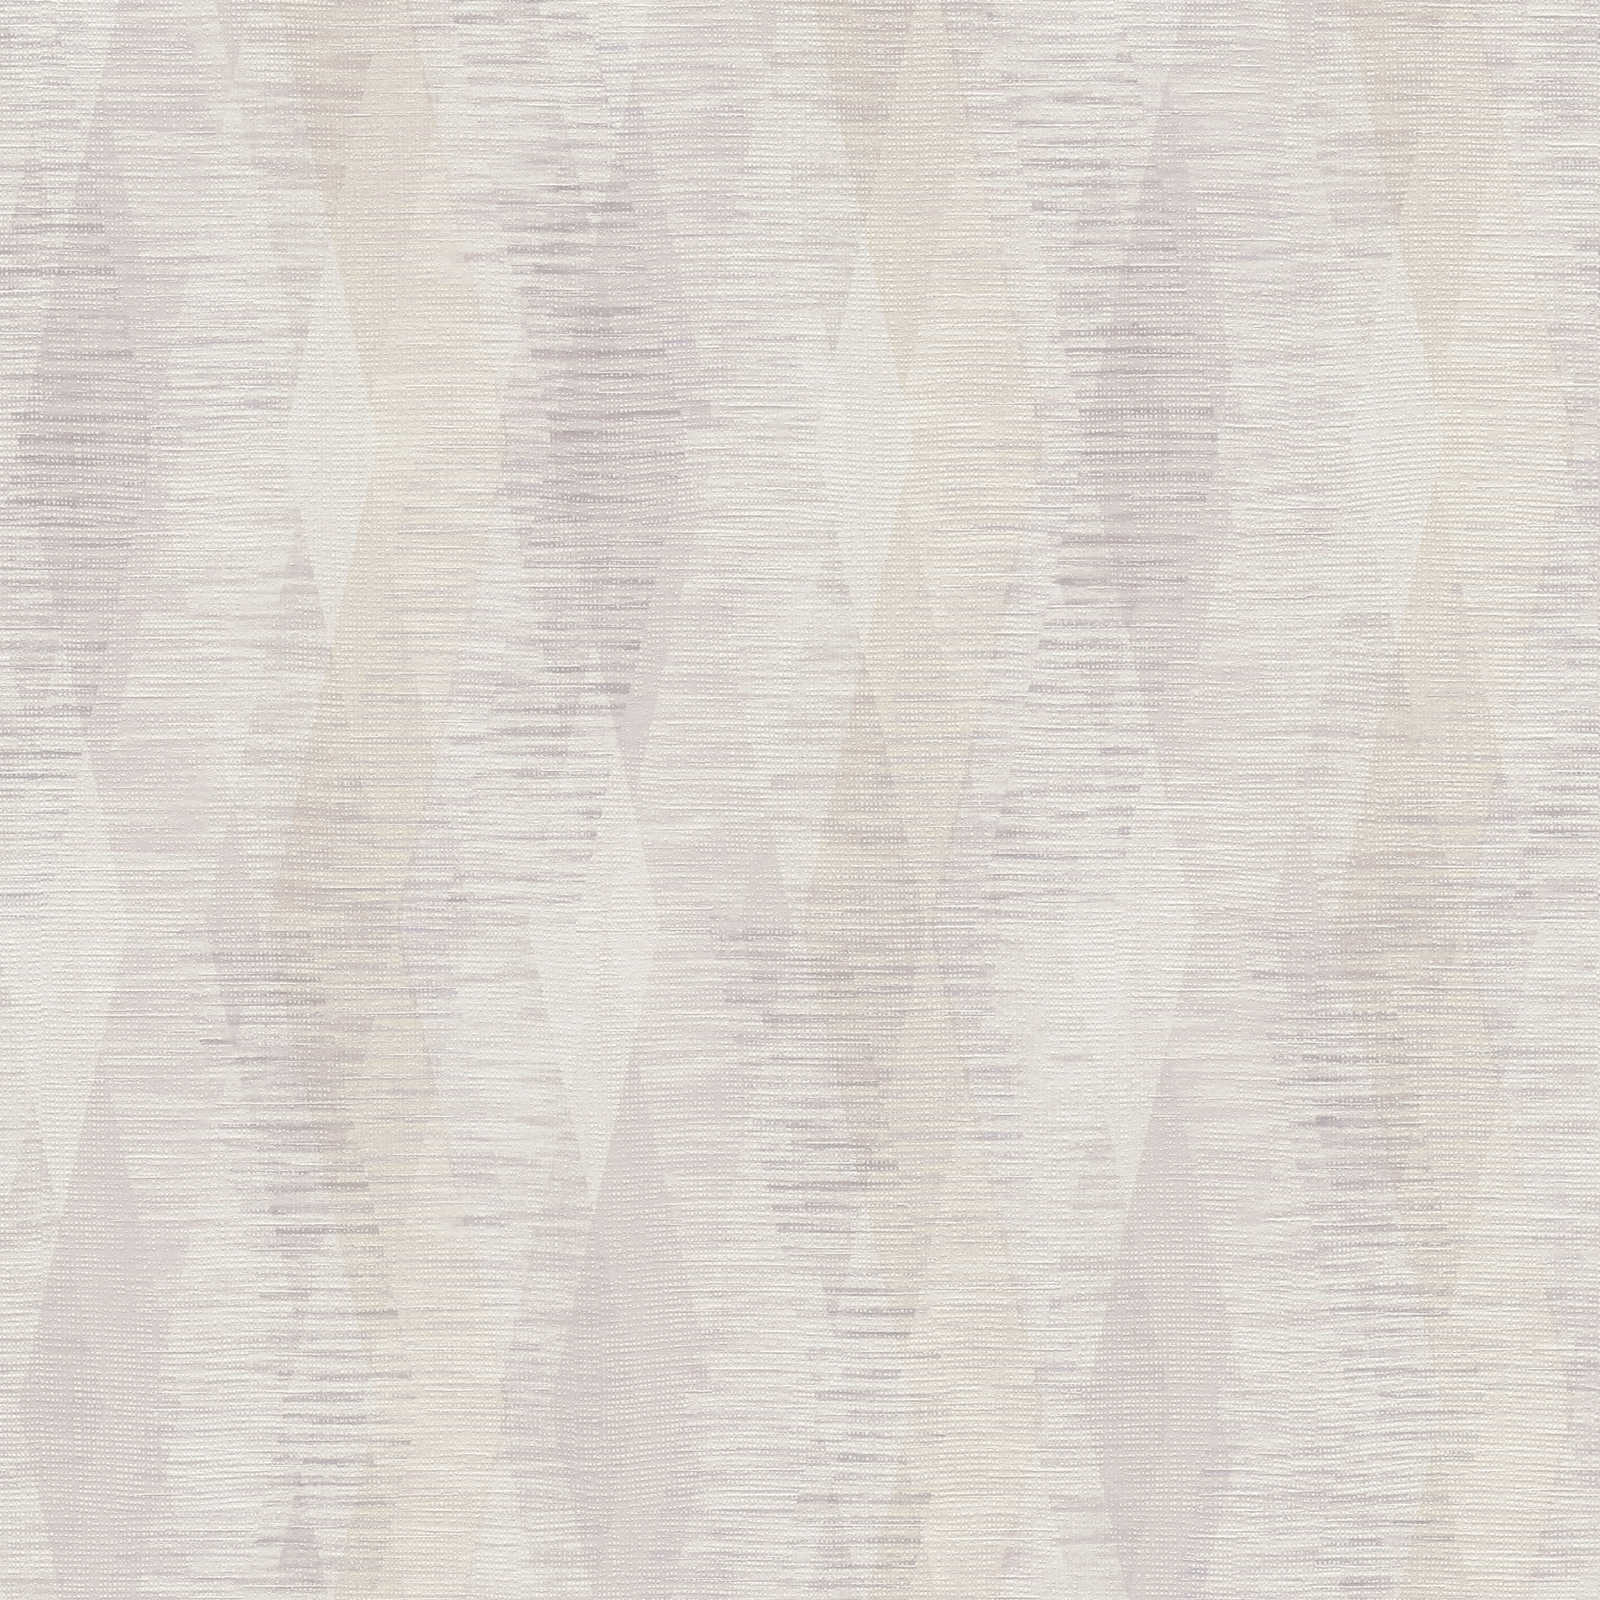 Textiloptik Tapete mit Rauten Muster – Beige, Creme, Braun
